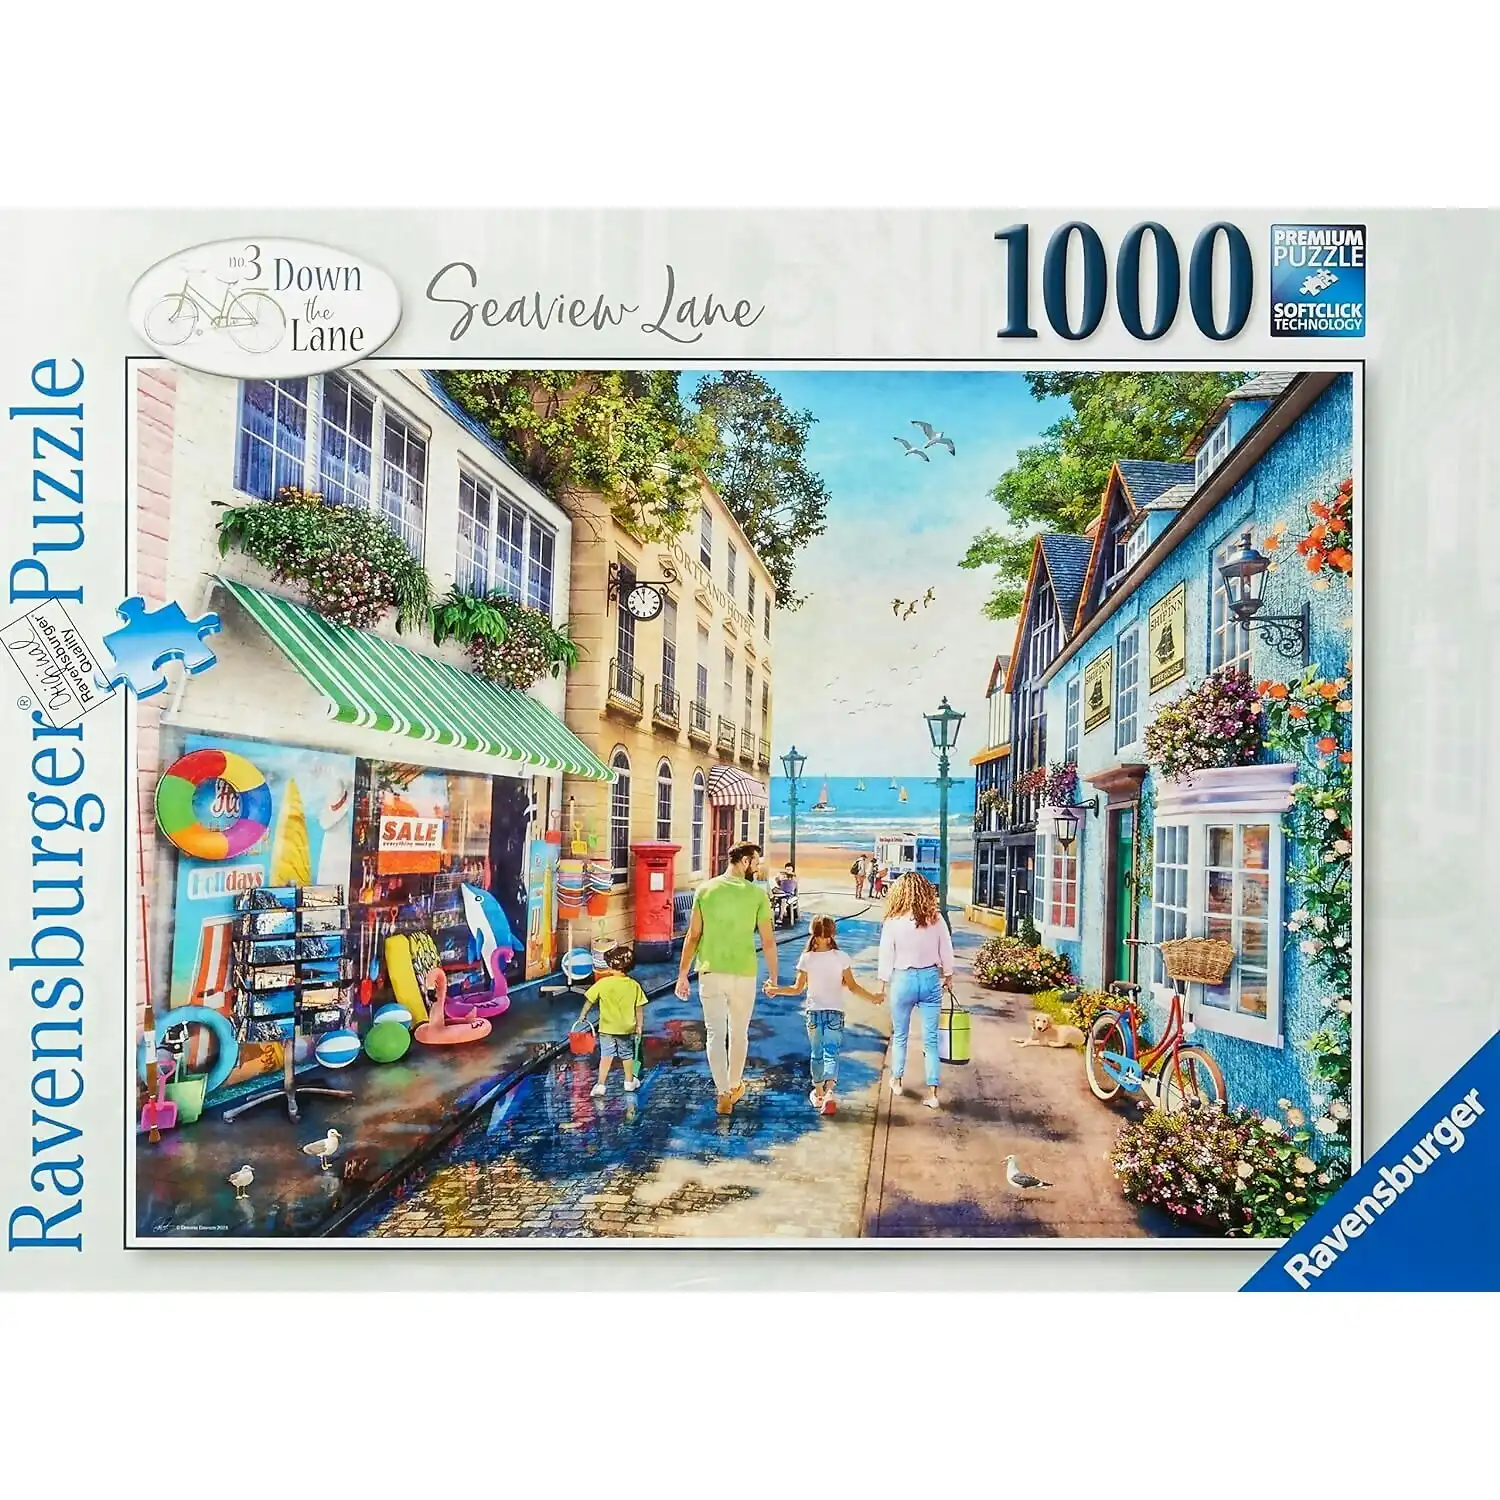 Ravensburger - Seaview Lane Jigsaw Puzzle 1000pc